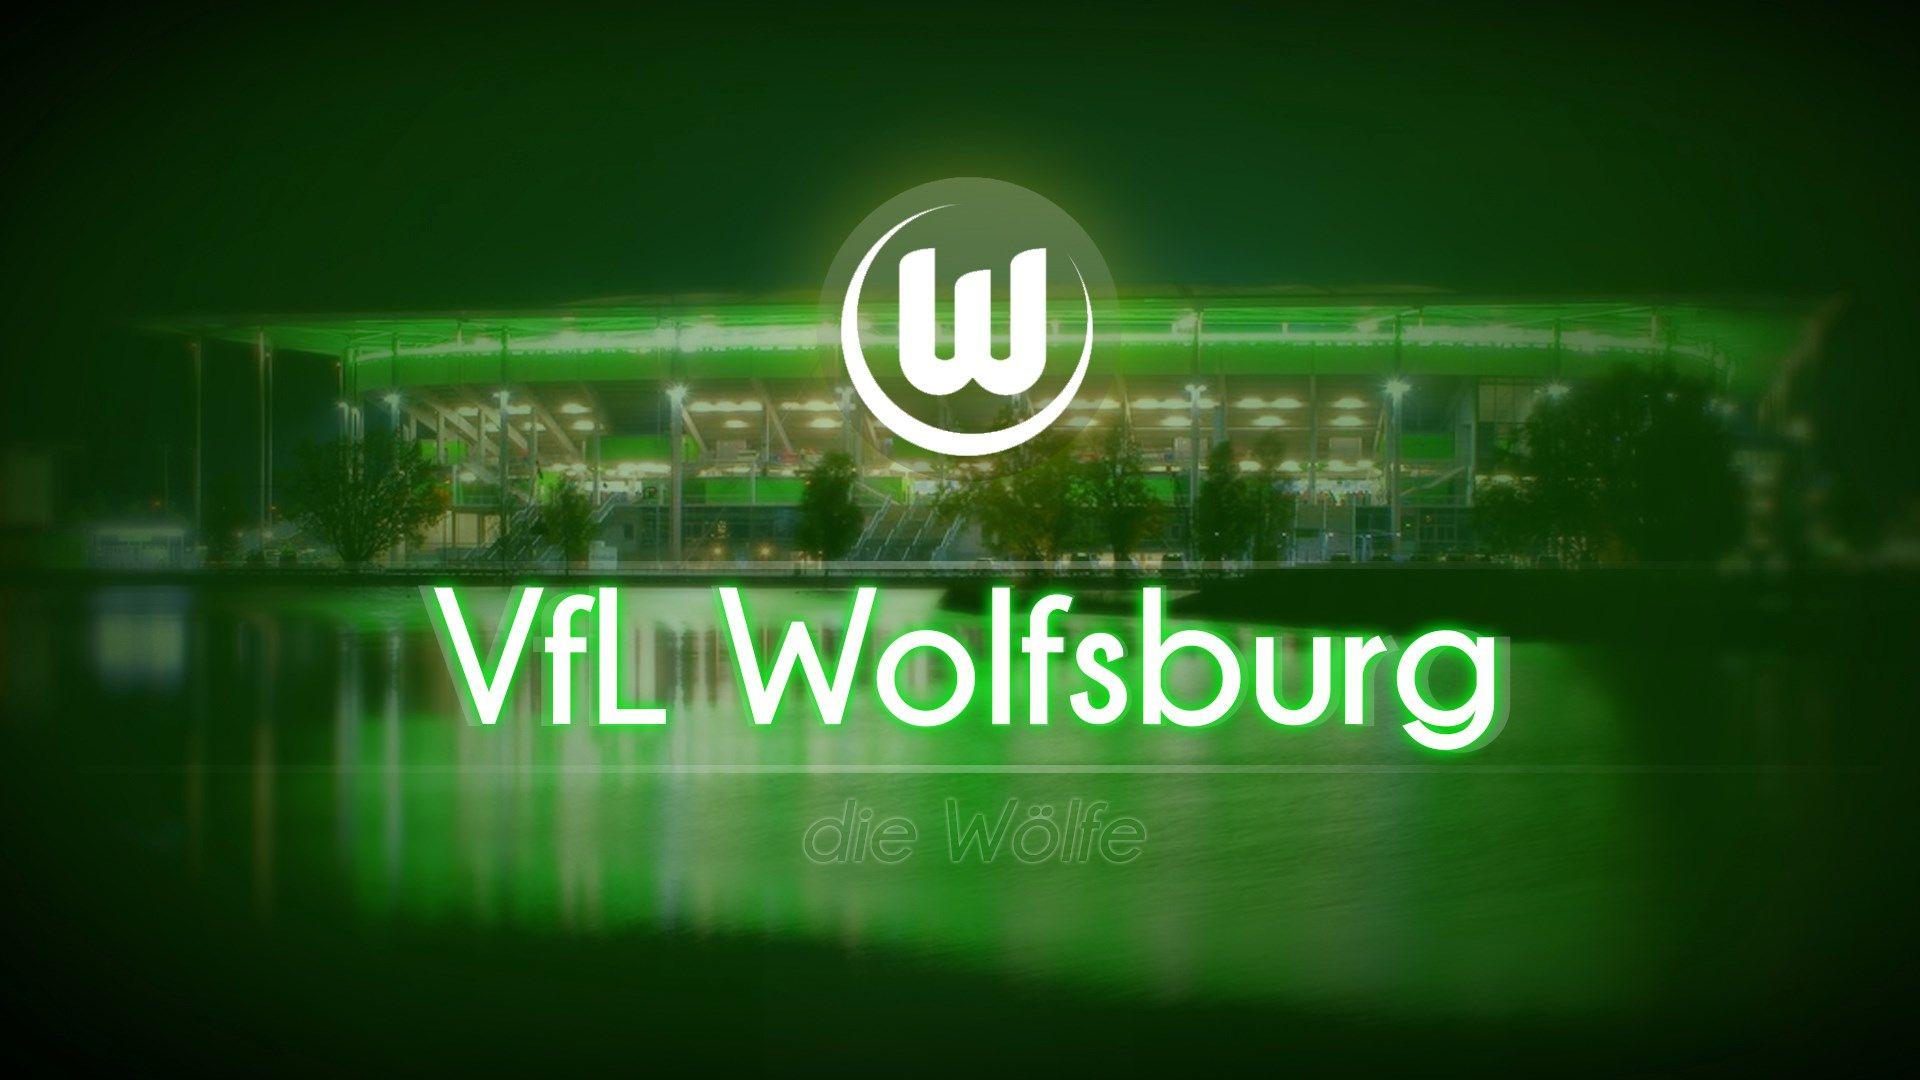 vfl wolfsburg wallpaper. sharovarka. Wolfsburg